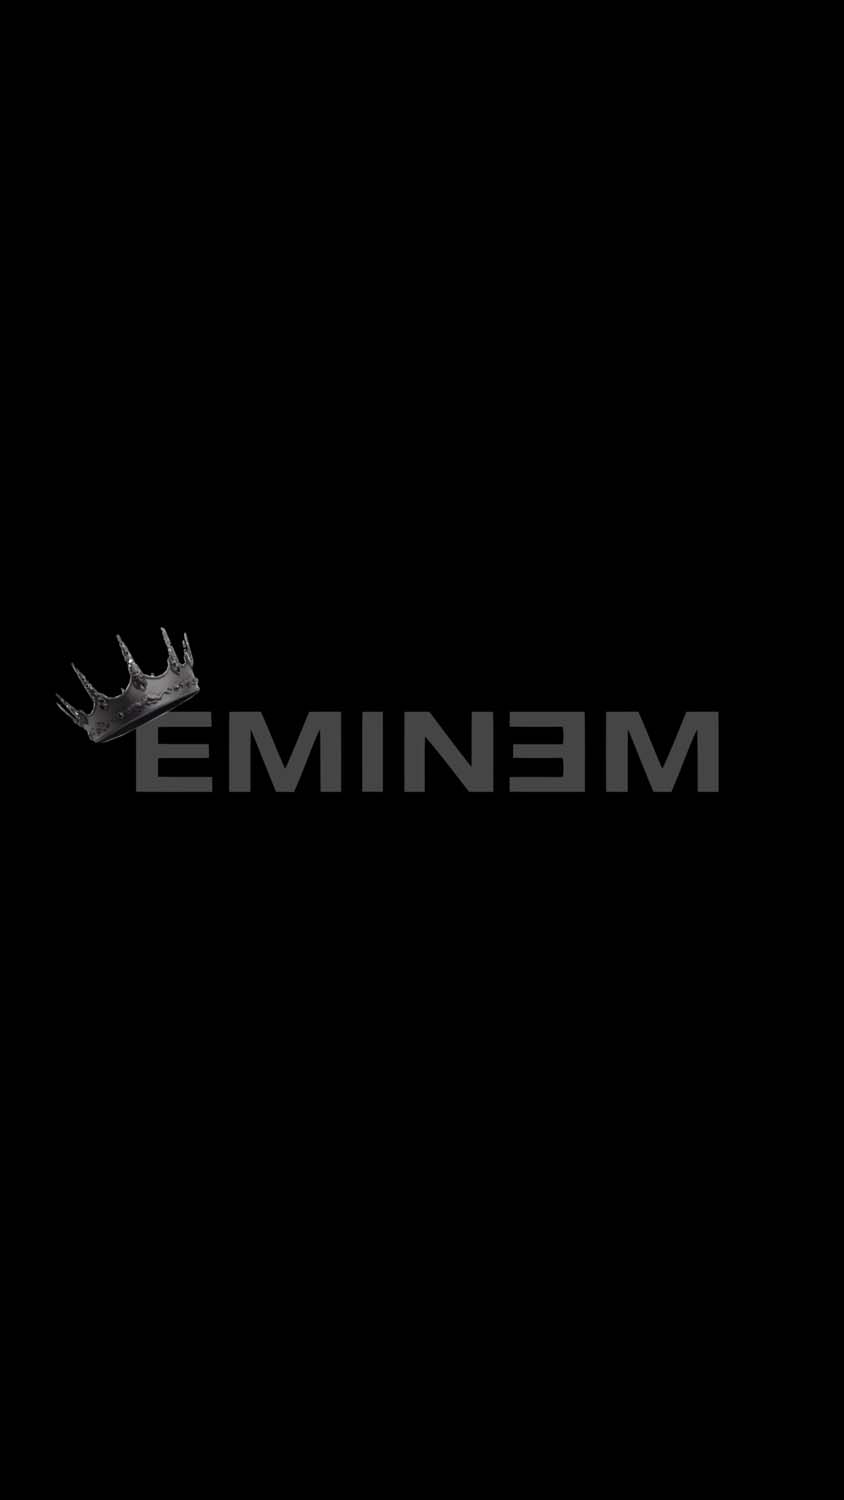 Eminem iPhone Wallpaper 4K - iPhone Wallpapers